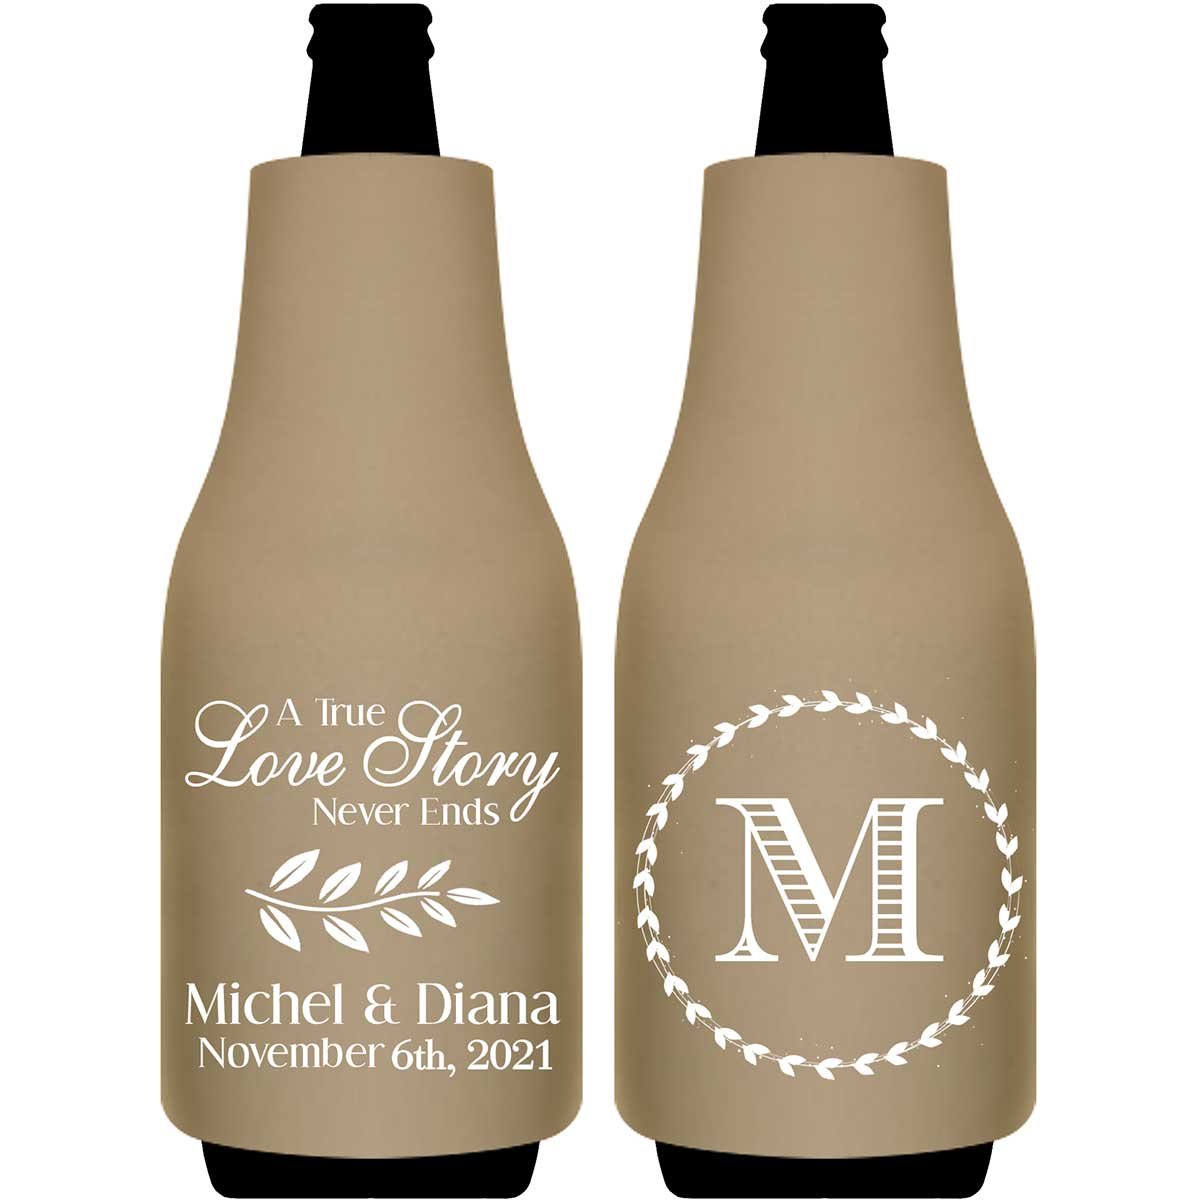 https://www.thatweddingshop.com/wp-content/uploads/2019/12/A-True-Love-Story-Never-Ends-1A-Collapsible-Foam-Bottle-Sleeve-Koozies-Romantic-Wedding-Favors.jpg